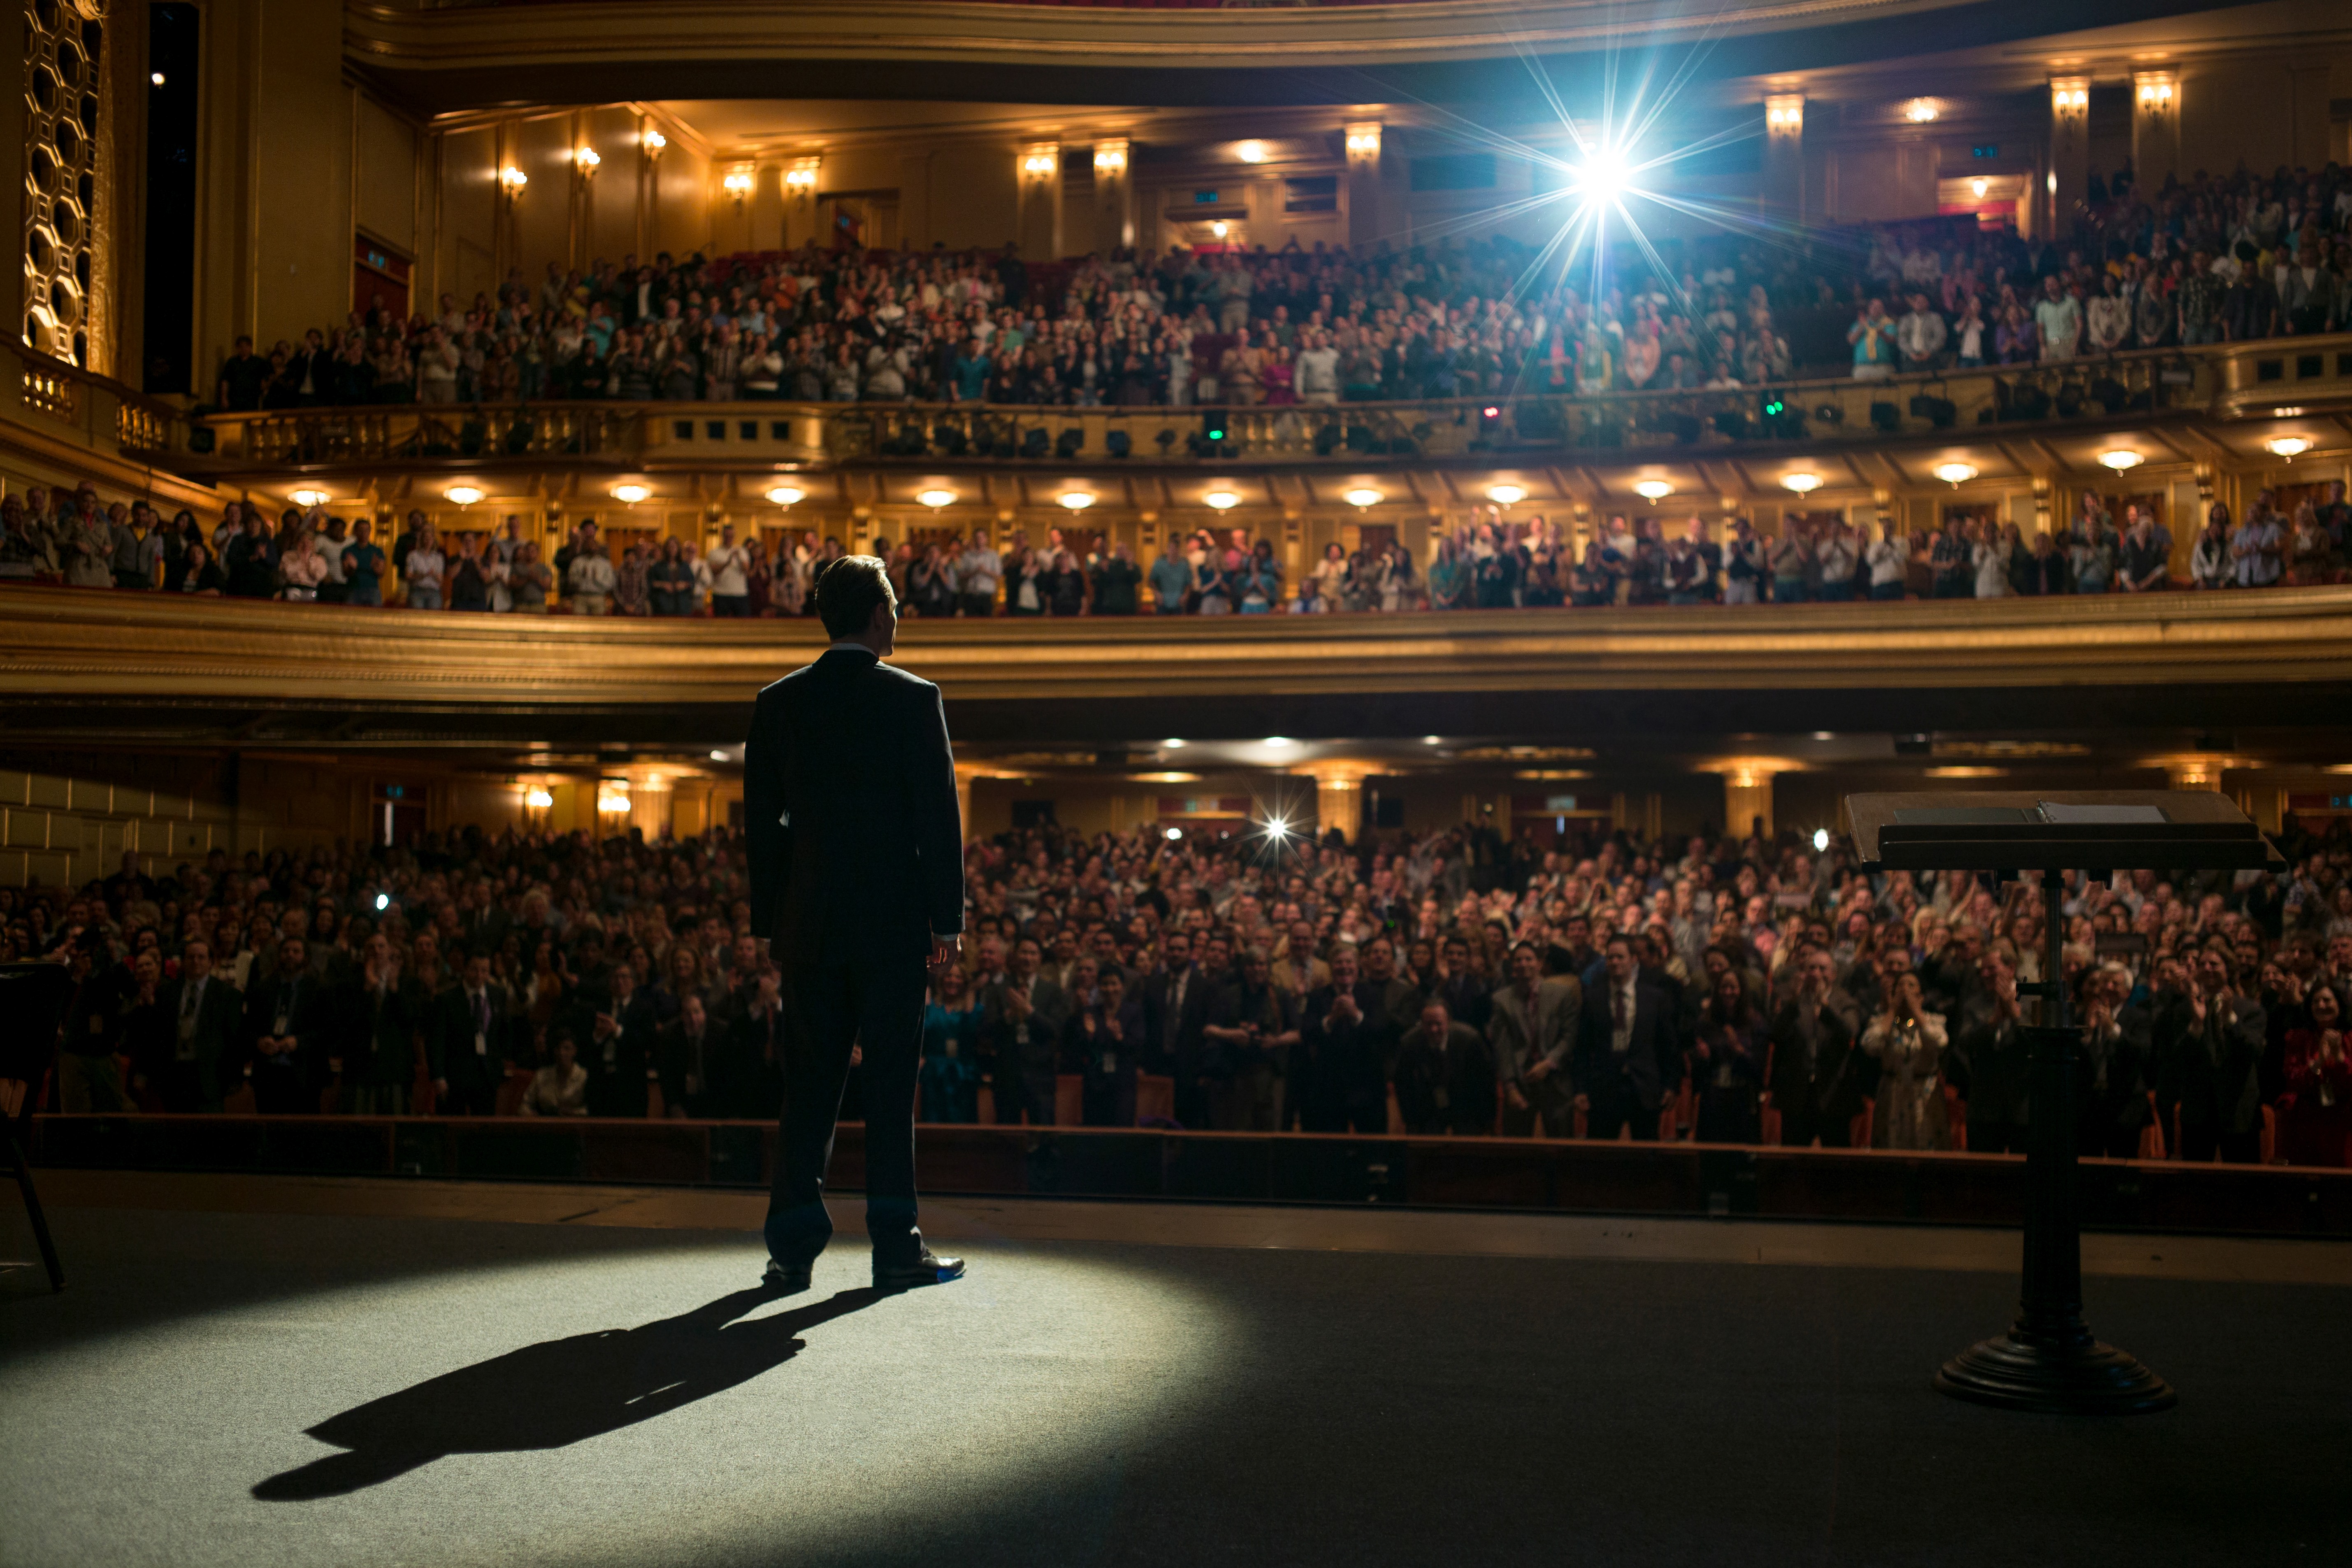 Сцена кадр. Стив Джобс. Стив Джобс кино 2015. Стив Джобс перед аудиторией. Стив Джобс фильм 2015 картинки.